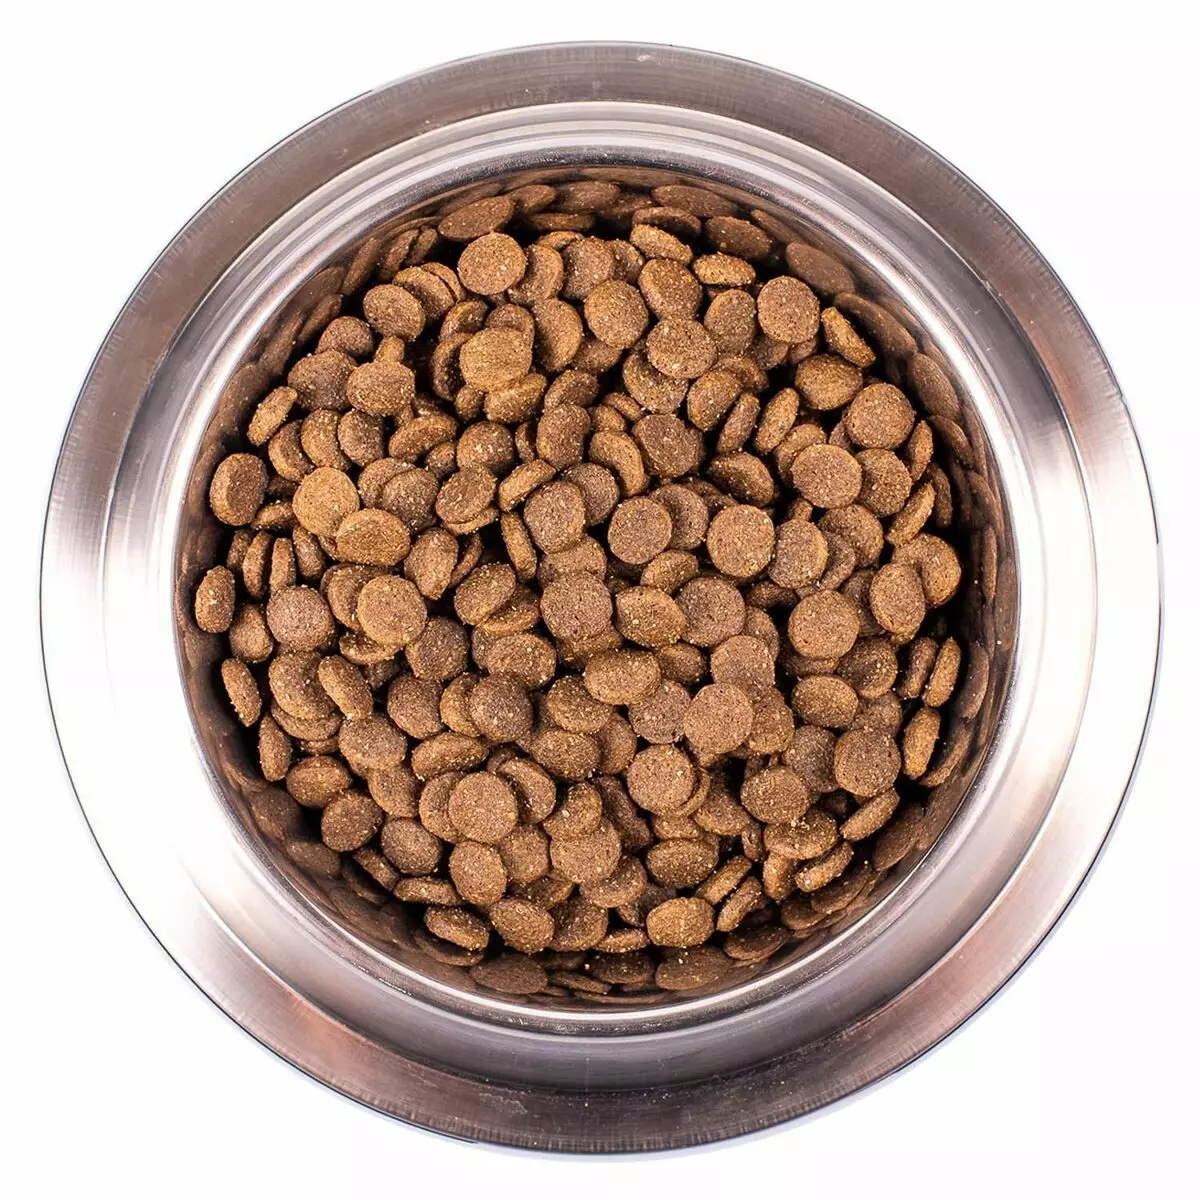 MONGE تغذية الكلب: تكوين الأغذية المعلبة (الرطب تغذية الكلب) والأعلاف الجافة، والحزم من 12-15 كجم. تغذية الرسول مع خروف الكلب Bwild الحبوب الحرة وغيرها من المنتجات والتعليقات 21642_7